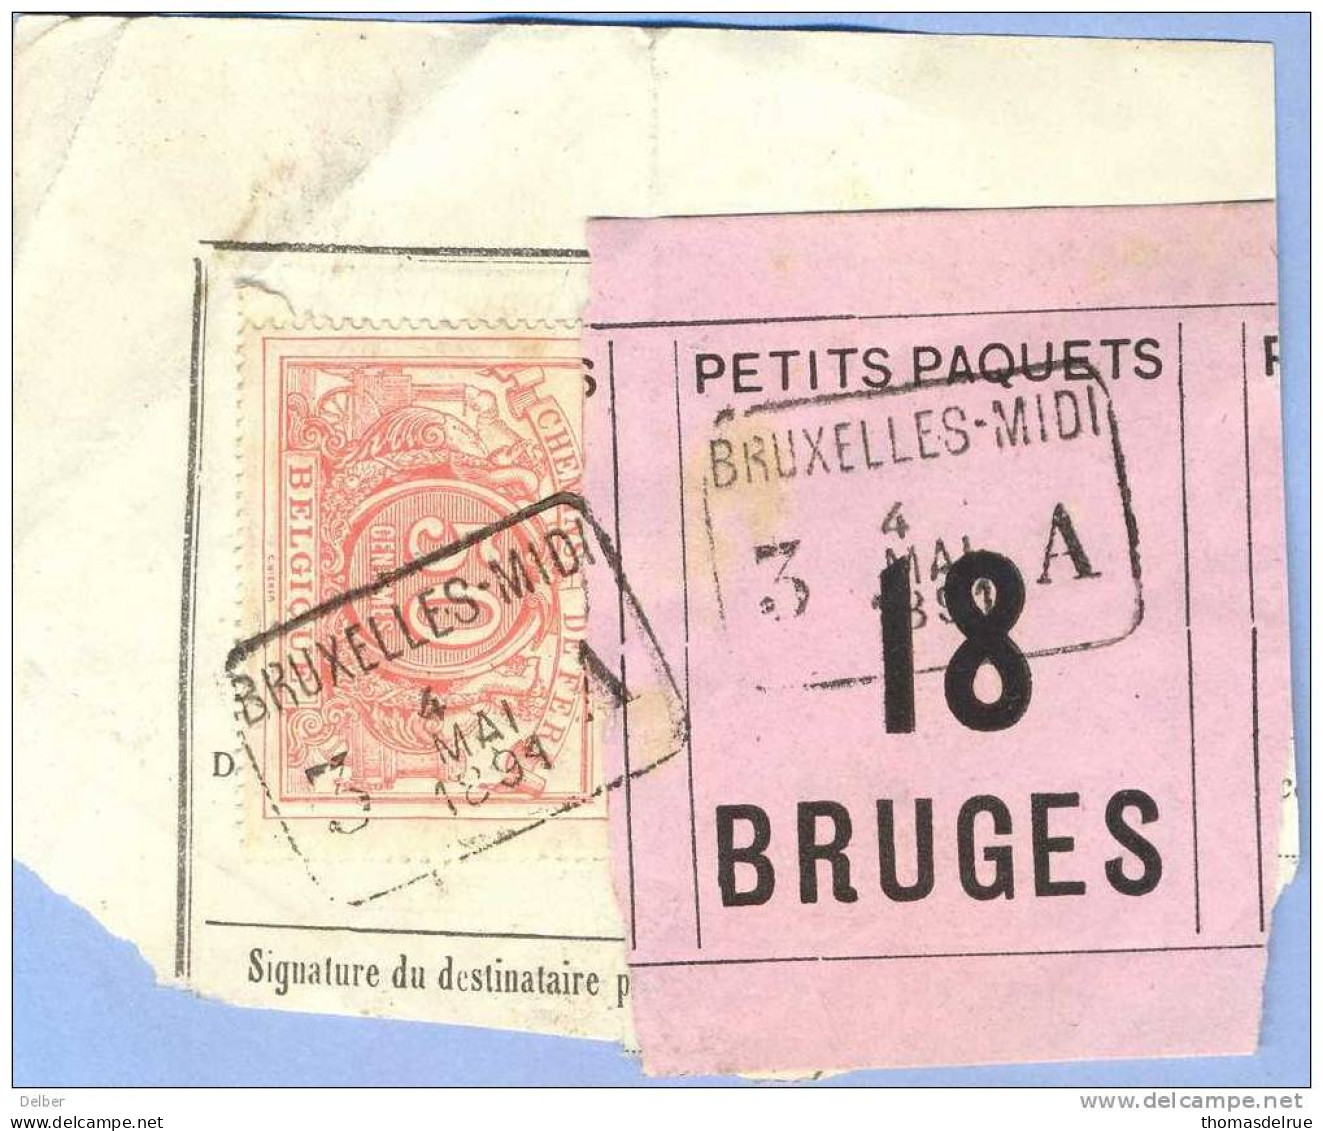 _V854: BRUXELLES-MIDI 3 __A  4 MAI 1891  >  BRUGES  - 3: Plat & Recht: SP11/ Fragment Met  " étiquette: PETITS PAQUETS:1 - Documenten & Fragmenten